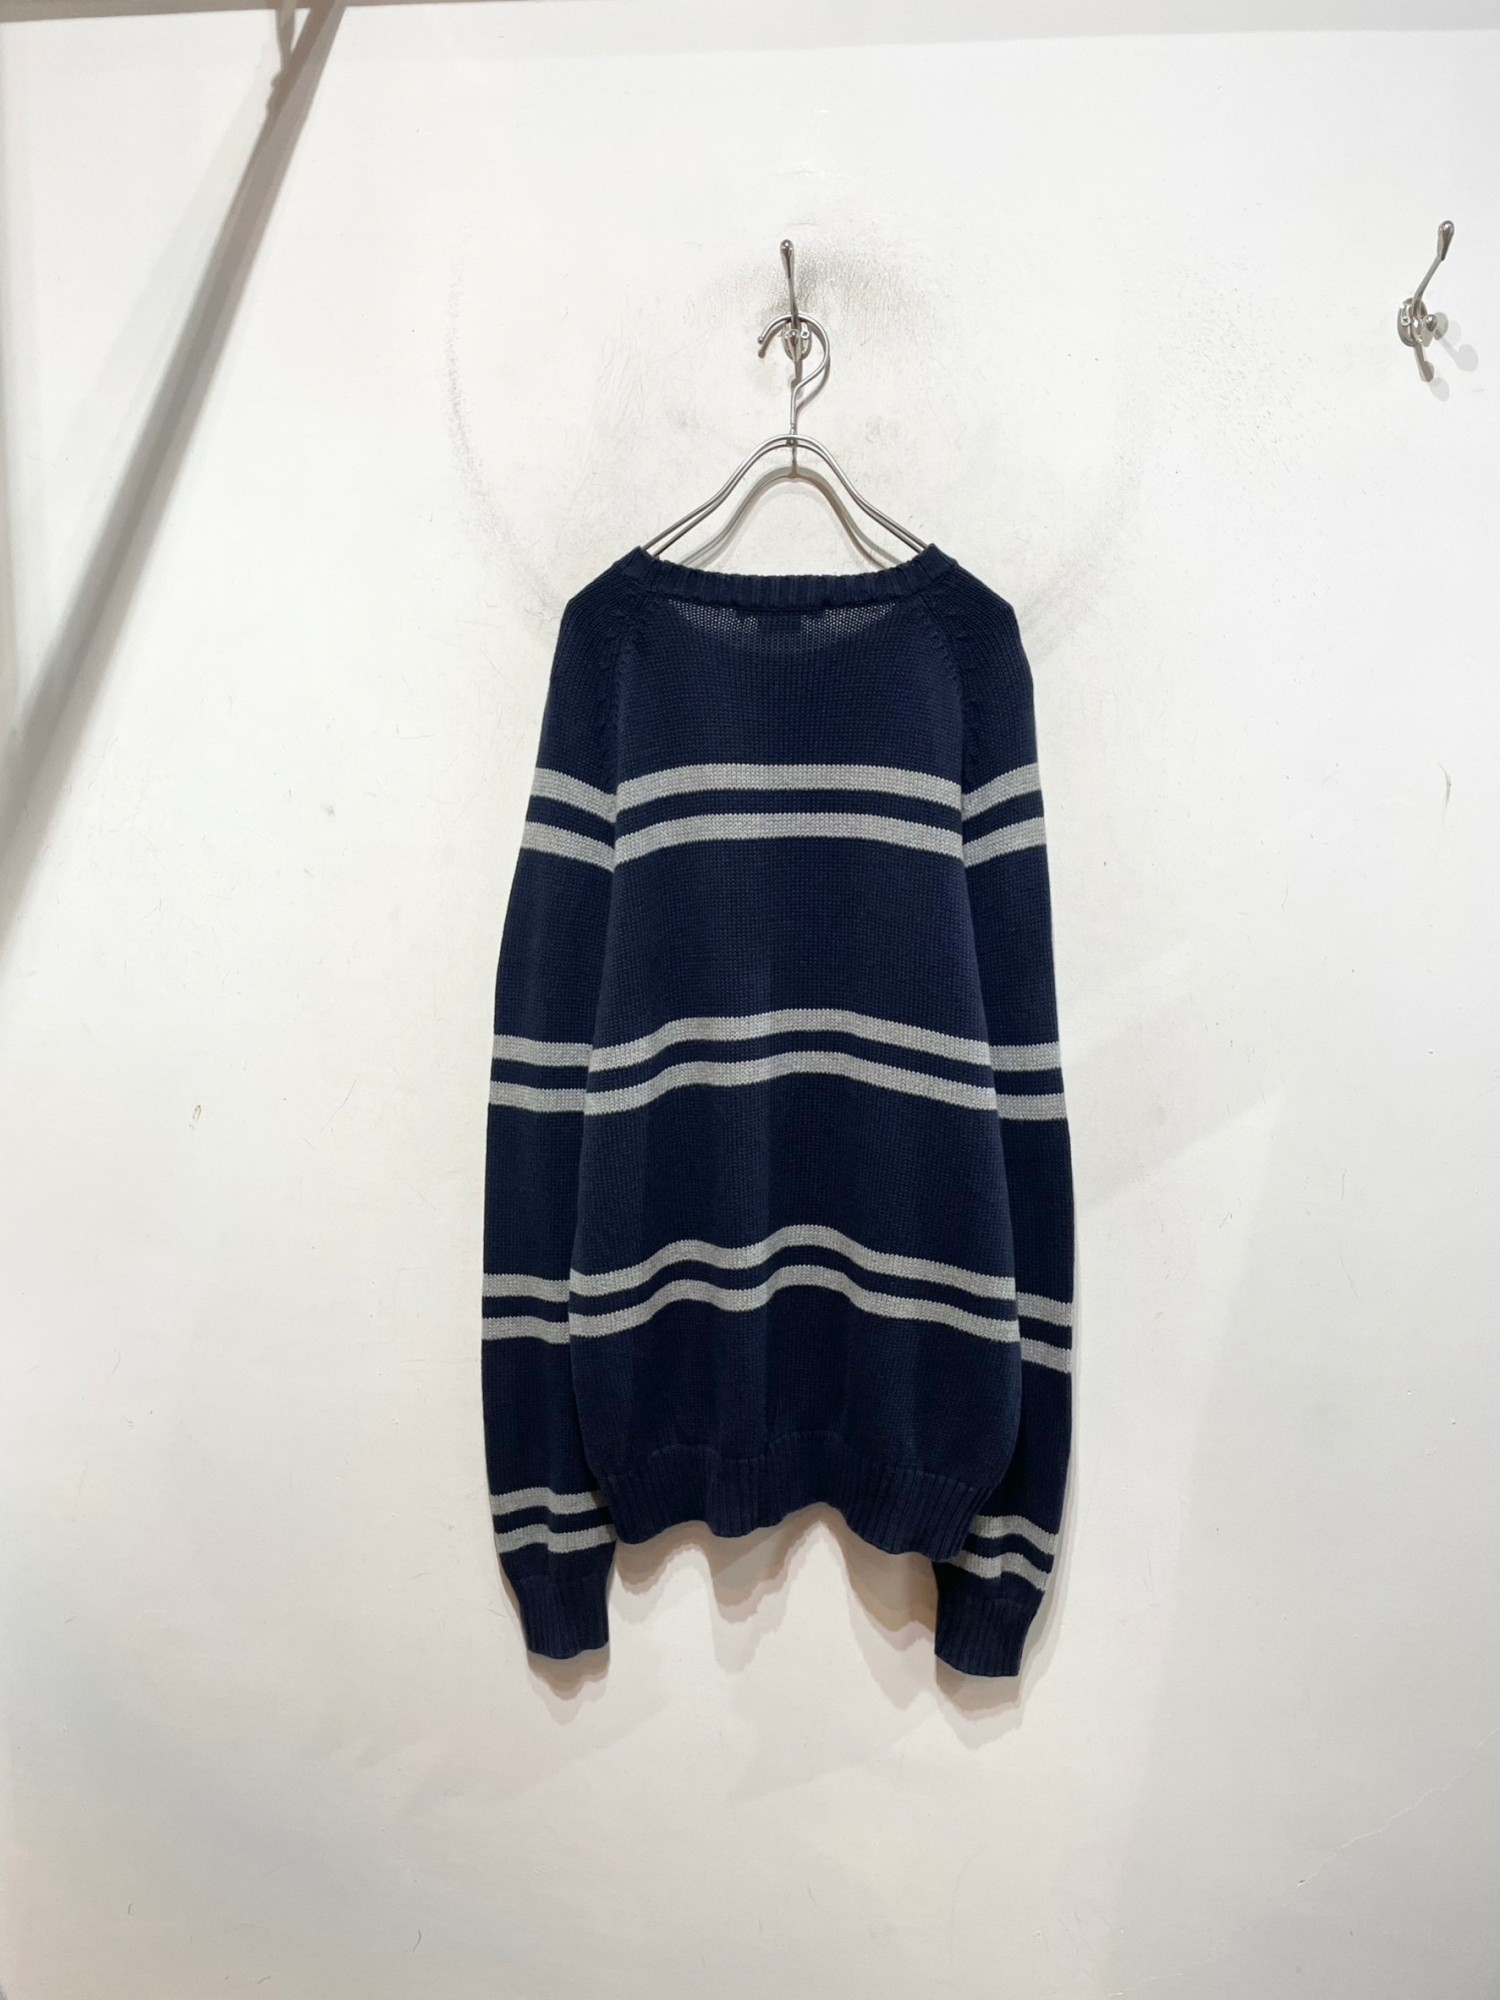 “KNIGHTSBRIDGE” Stripes Cotton Knit